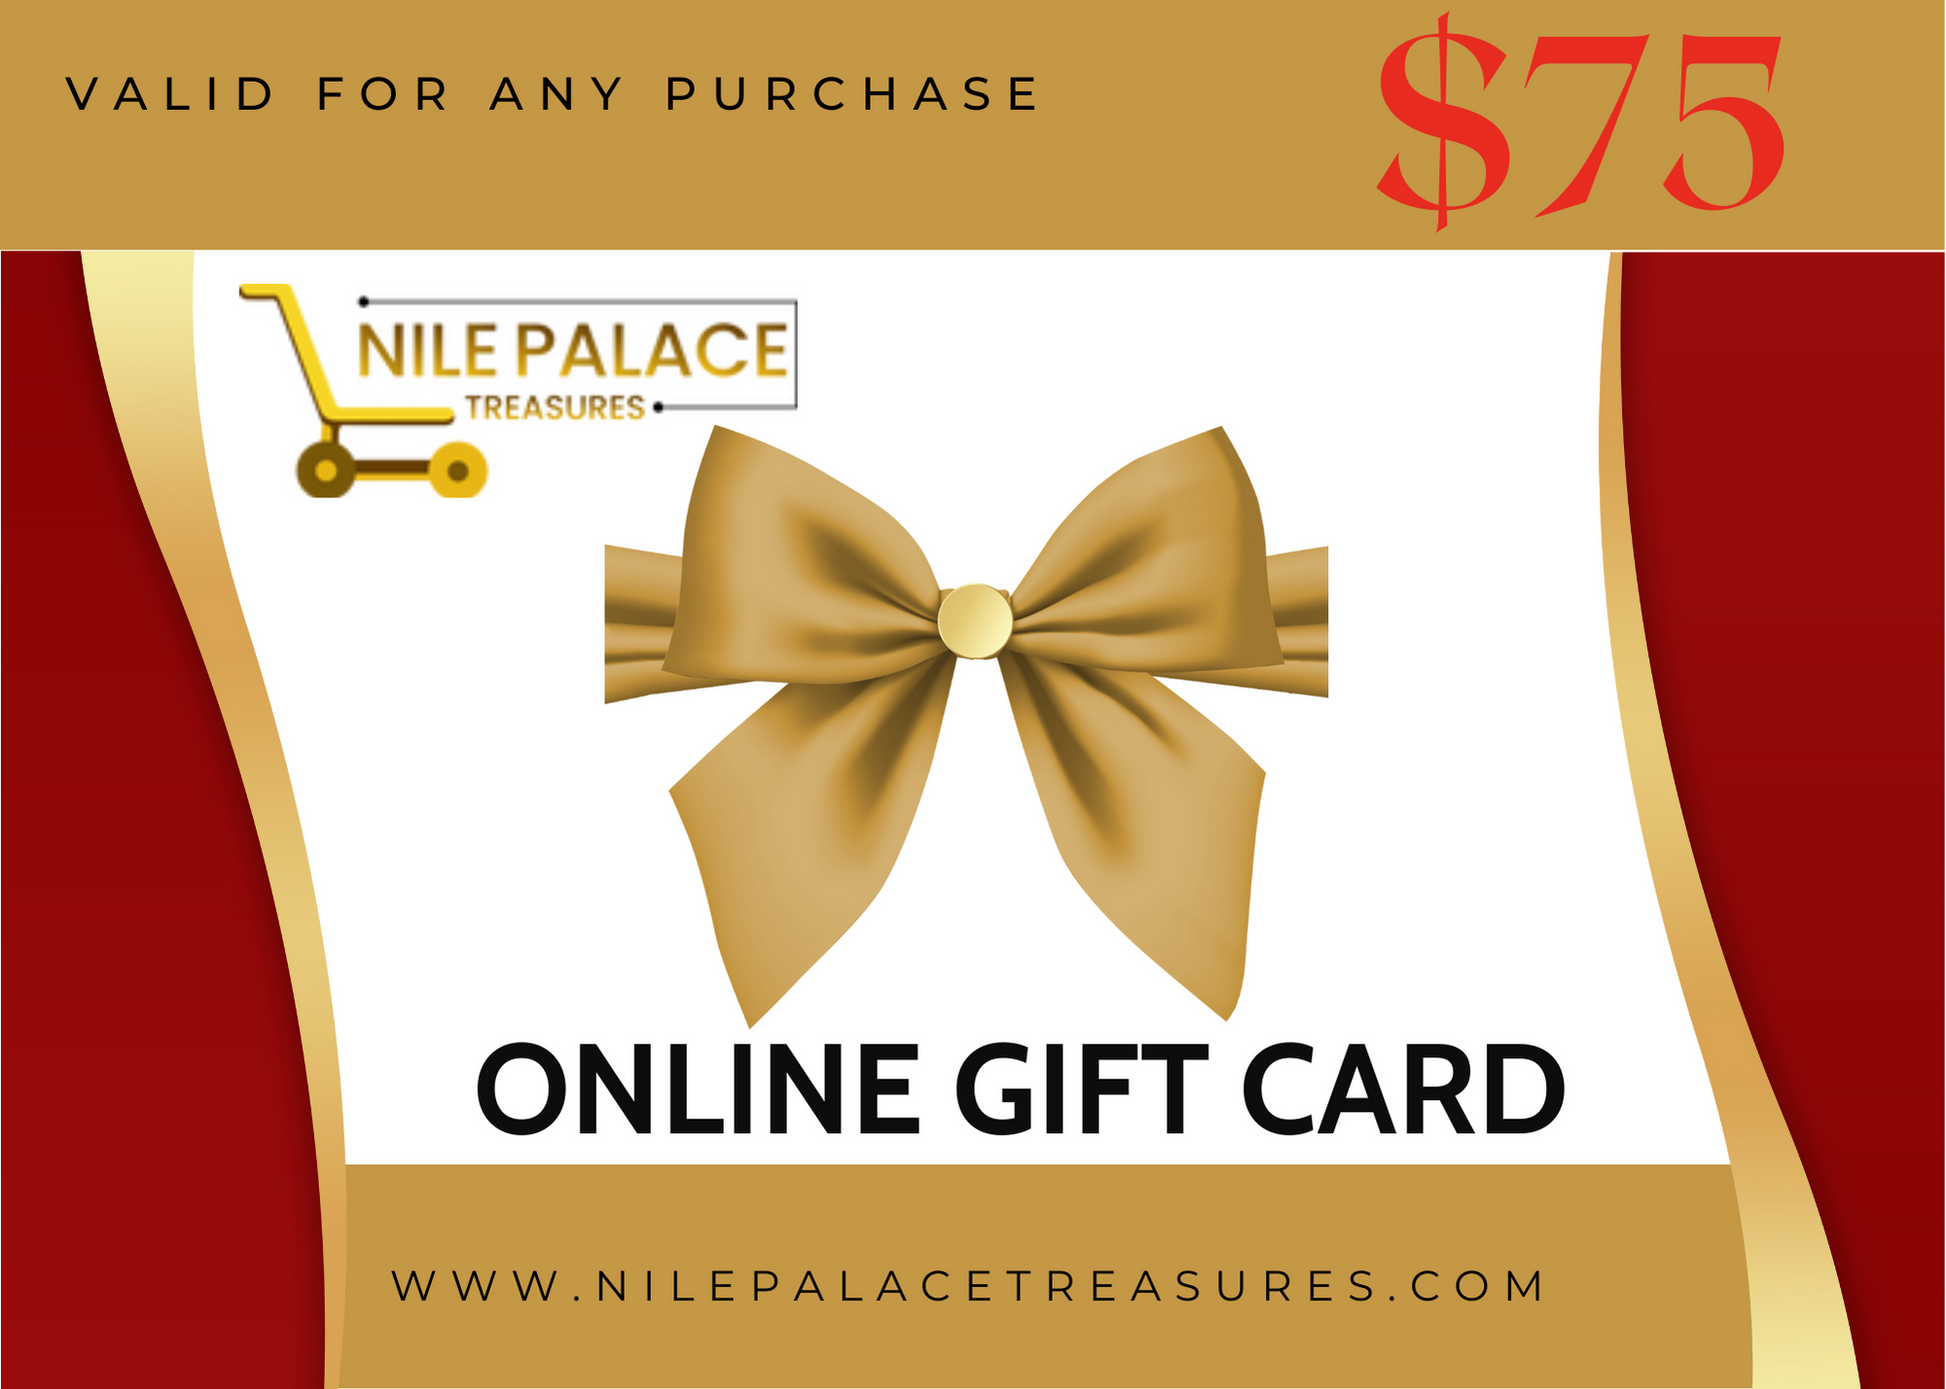 Nile Palace Treasures Gift Card - Nile Palace Treasures nile-palace-gift-card, Gift Cards